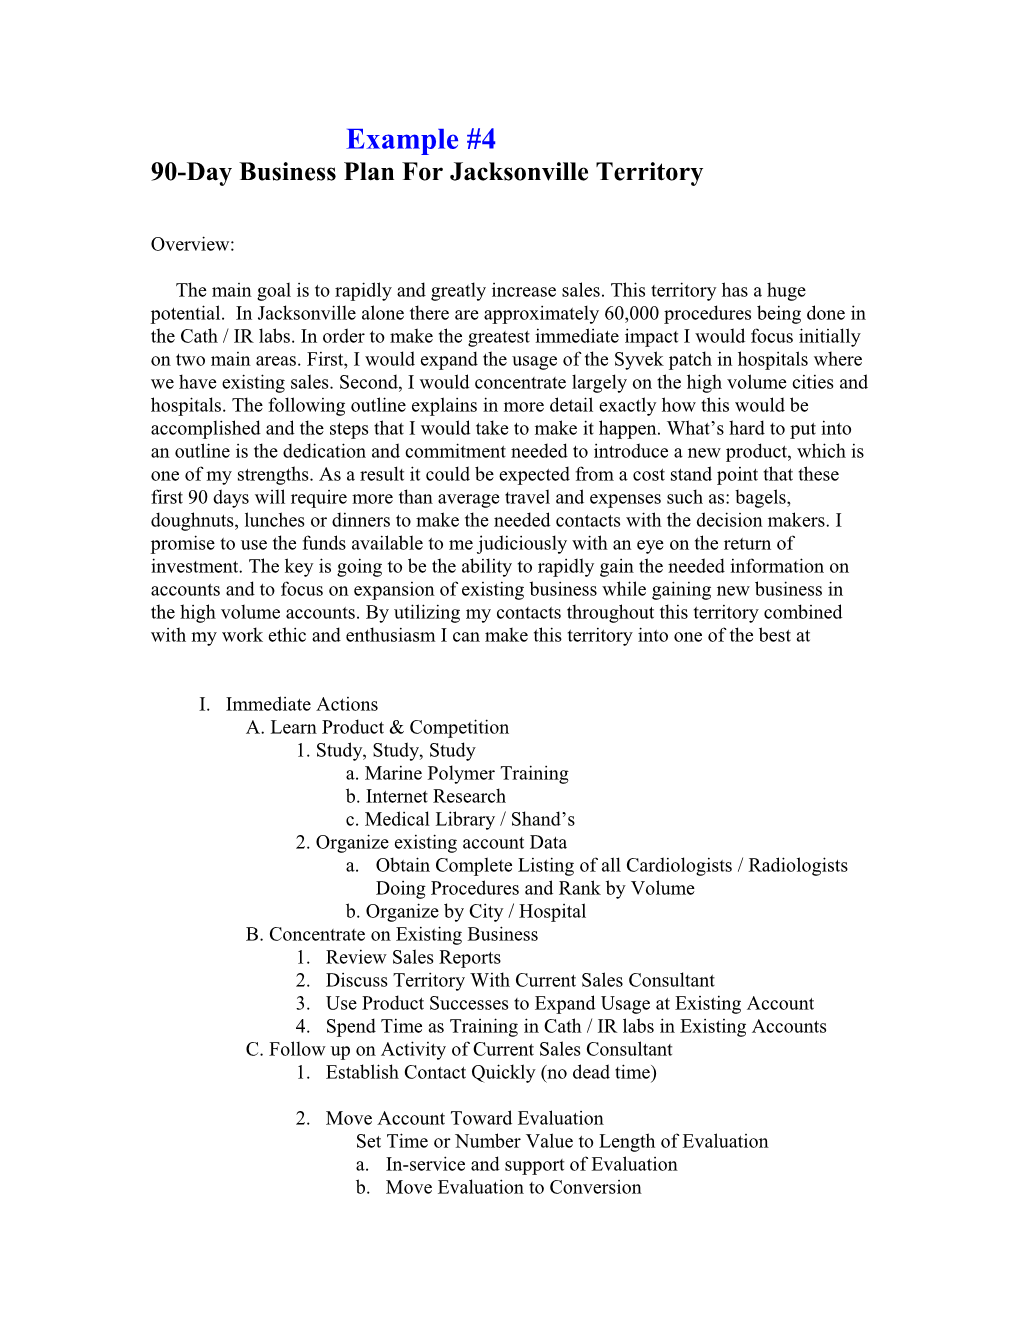 90-Day Business Plan for Jacksonvilleterritory